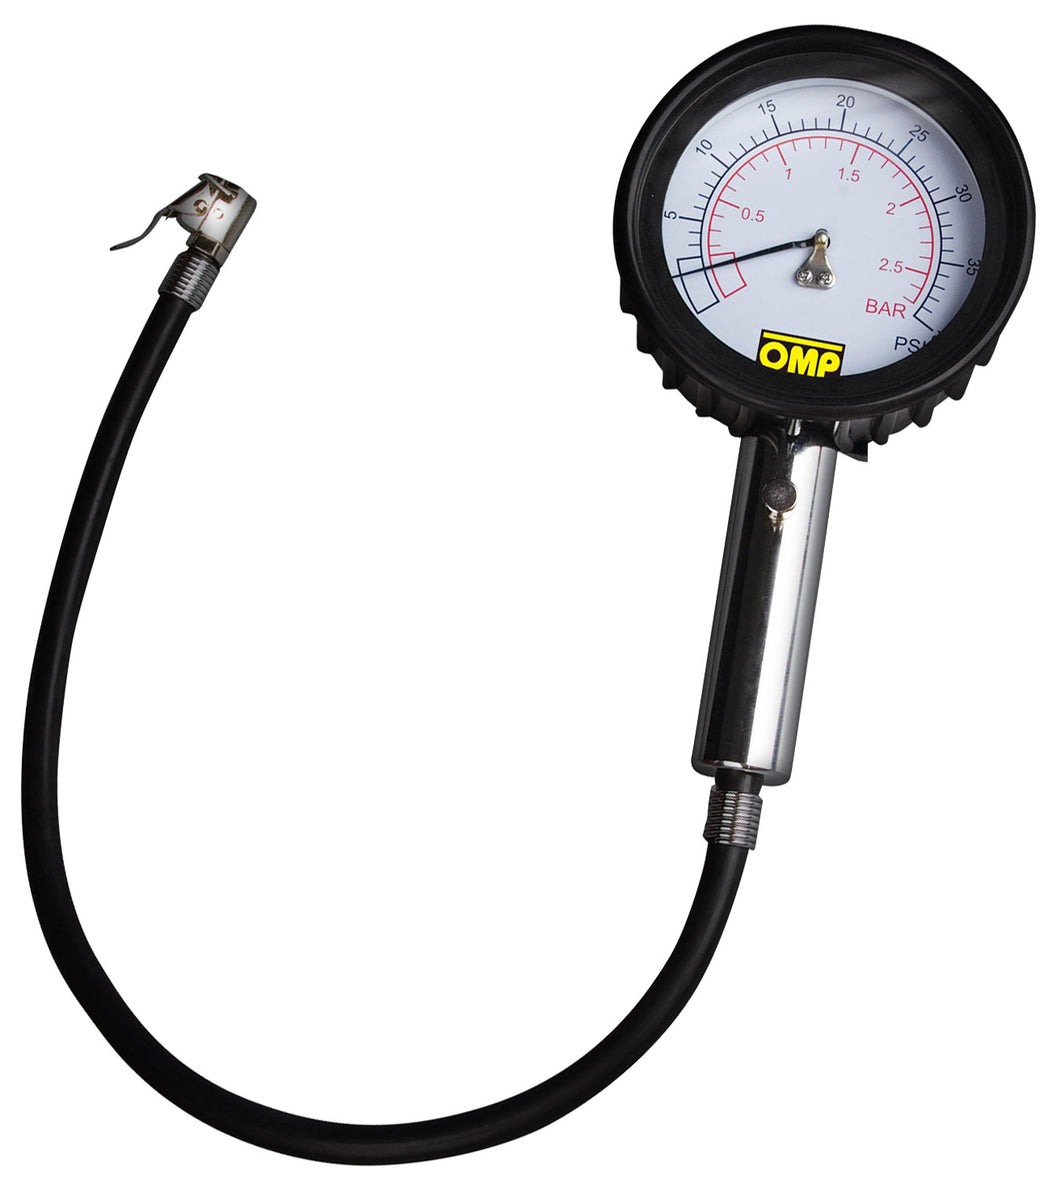 OMP air pressure meter